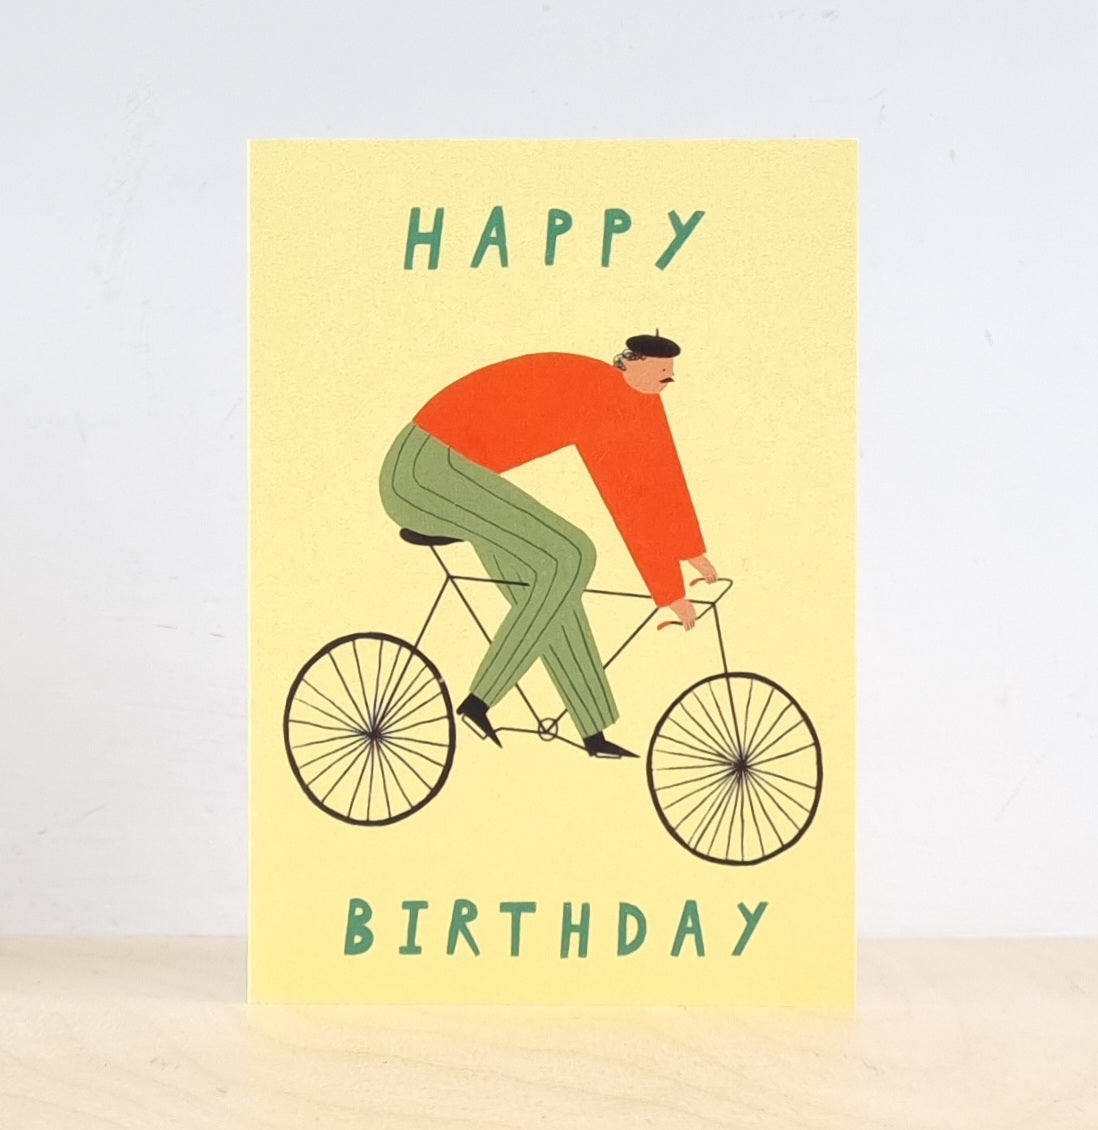 Happy birthday on bike card